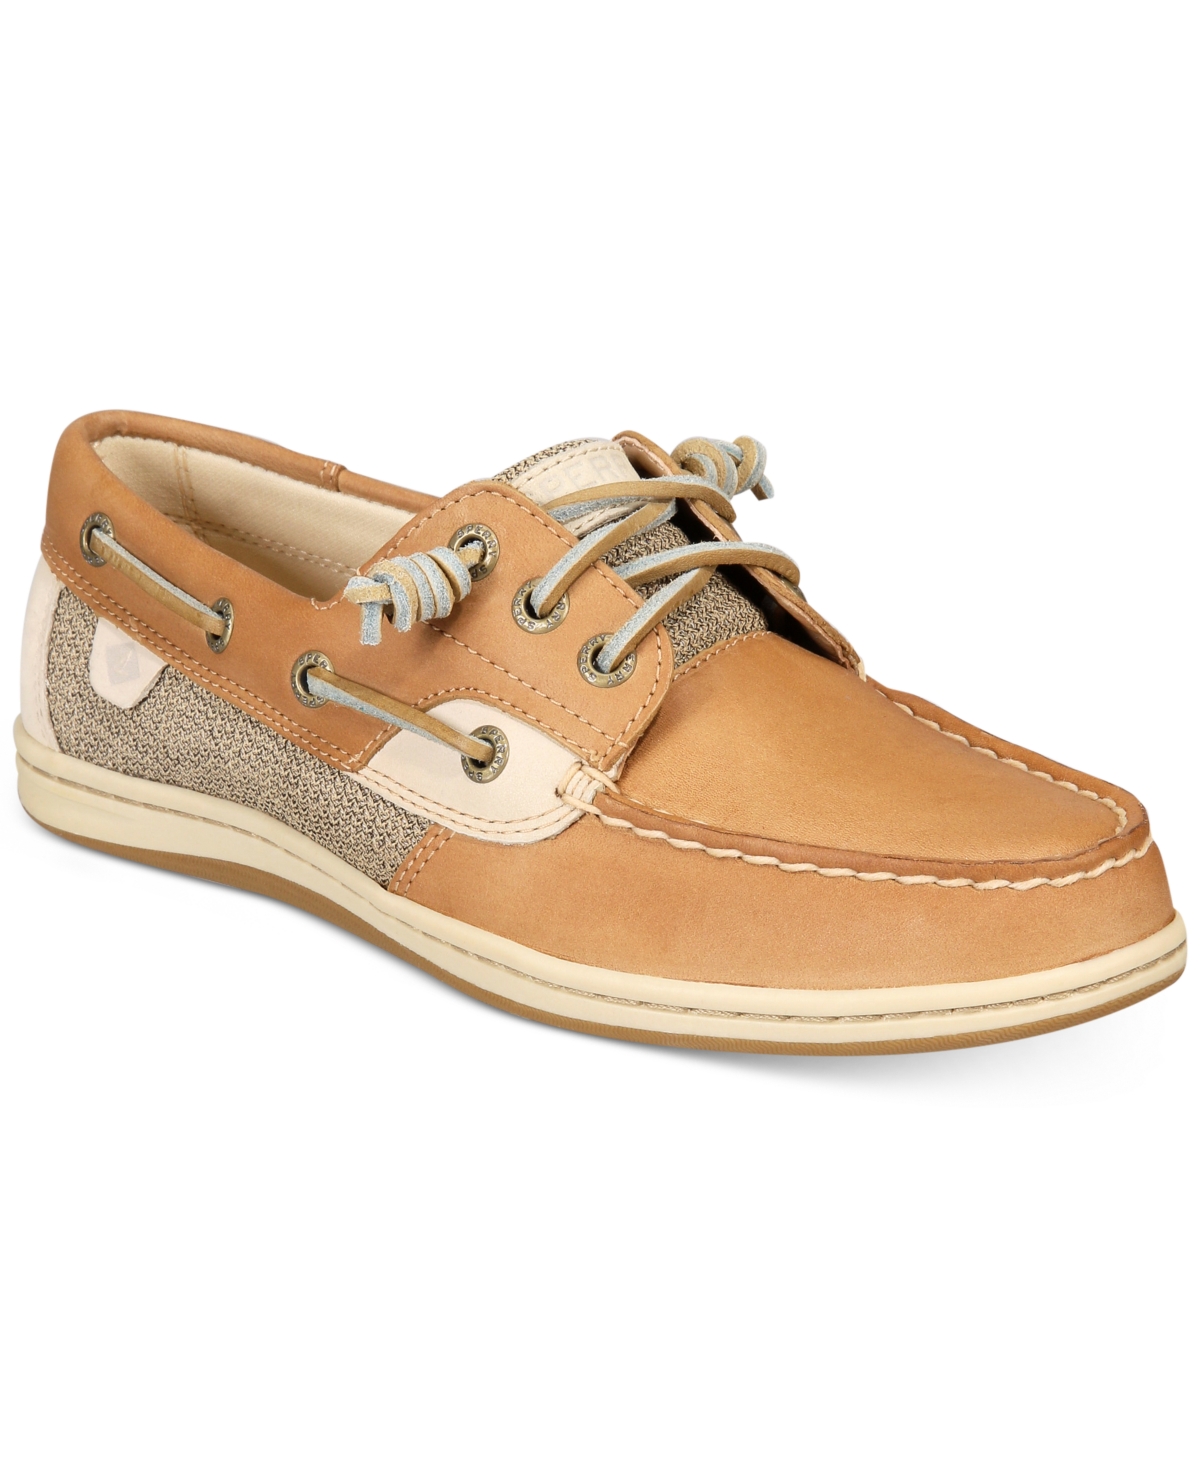 Women's Songfish Boat Shoes - Linen/Oat